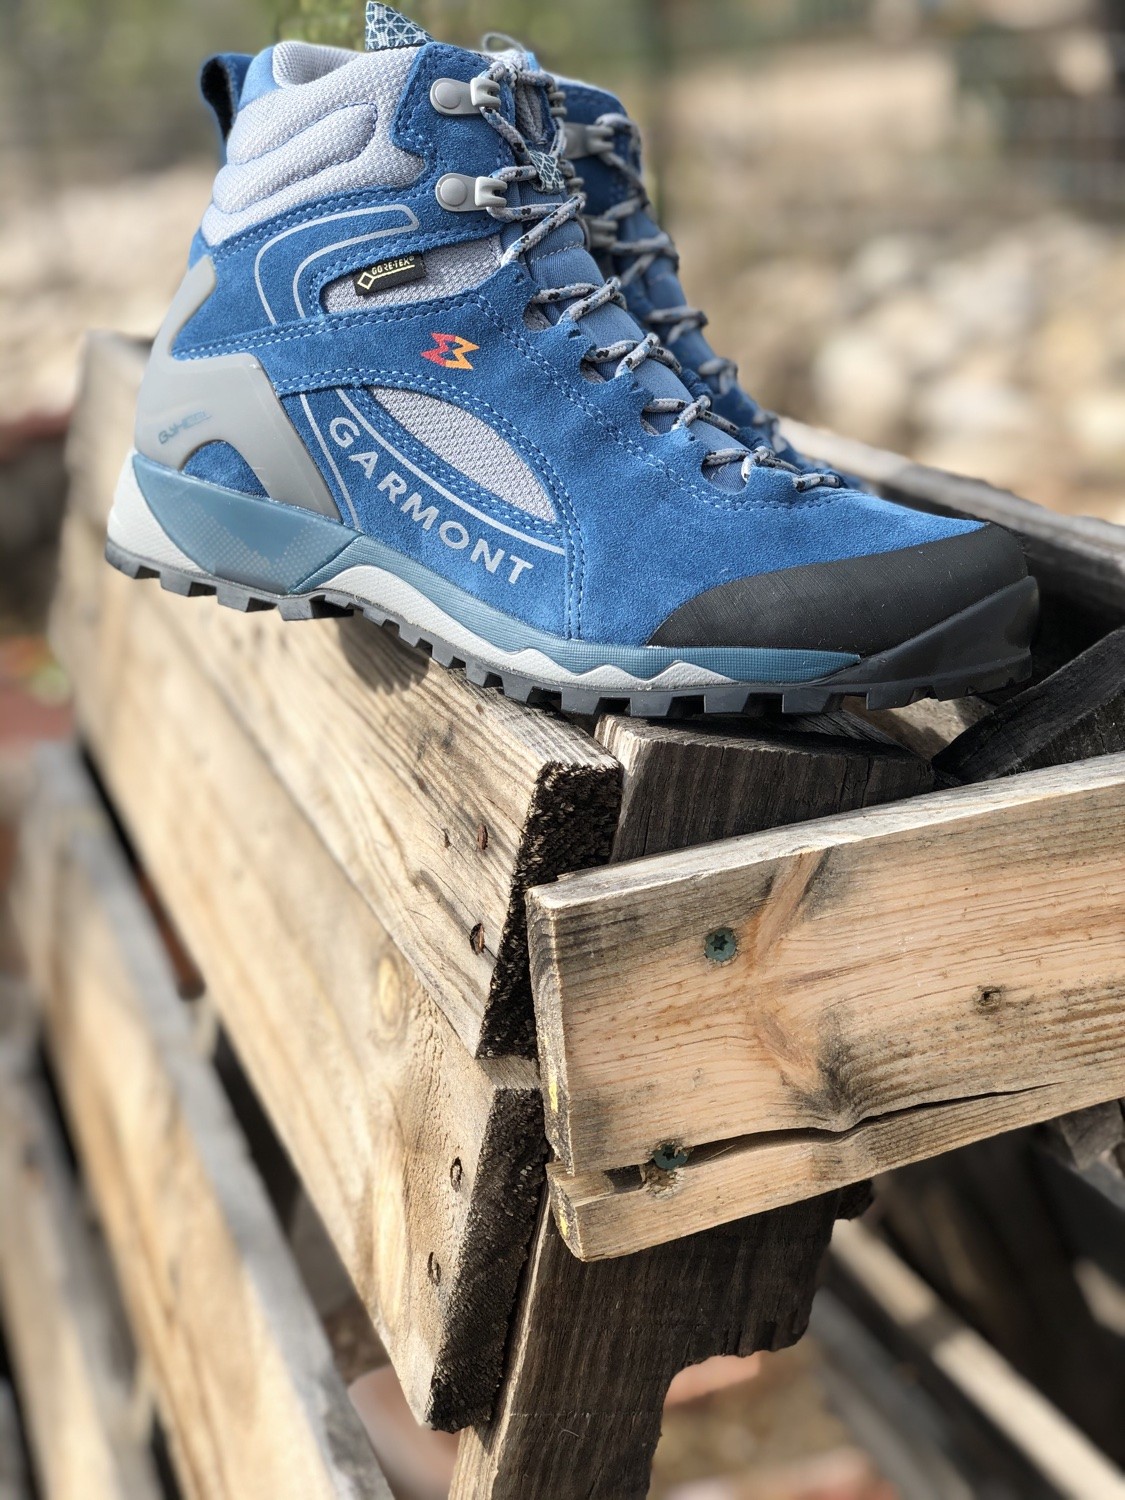 Womens Tower Hike GTX Garmont blue hiking boots